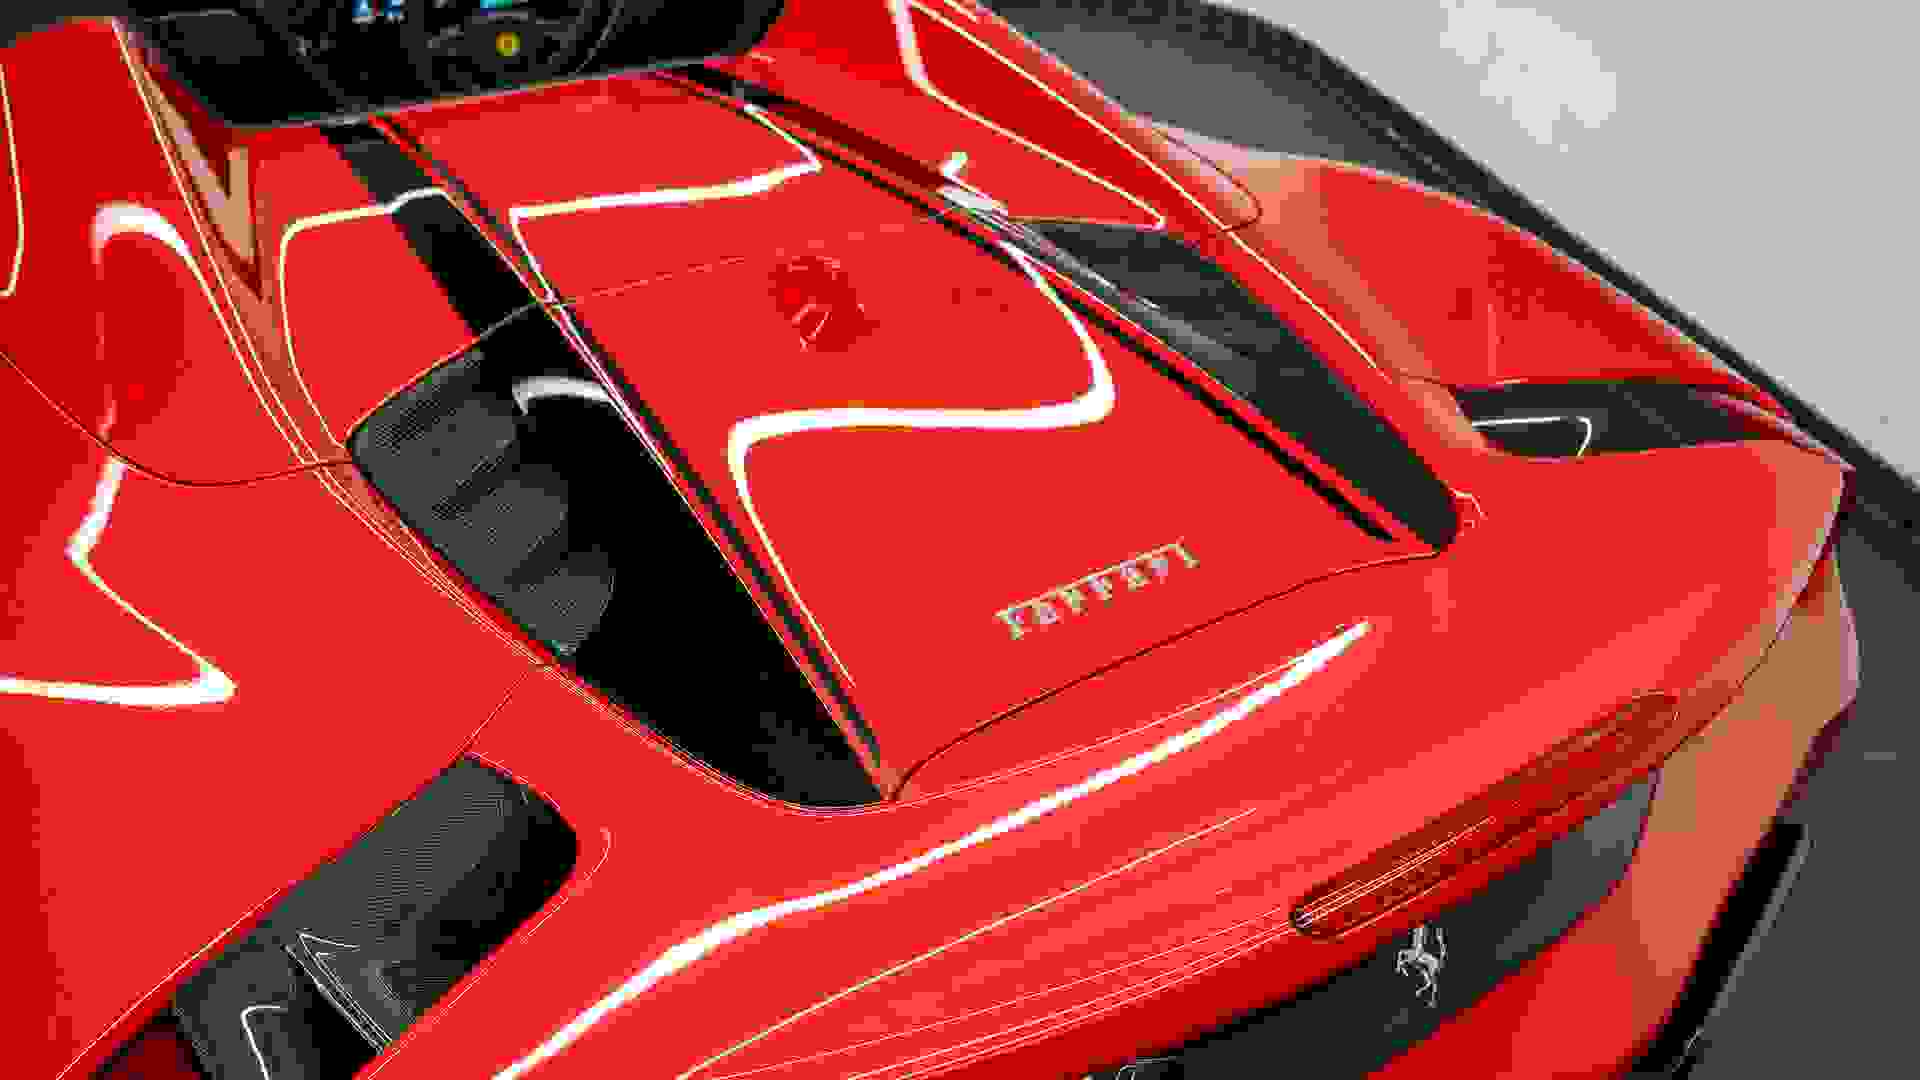 Ferrari 488 Photo 096c0153-6b91-414d-a422-d054640557ba.jpg